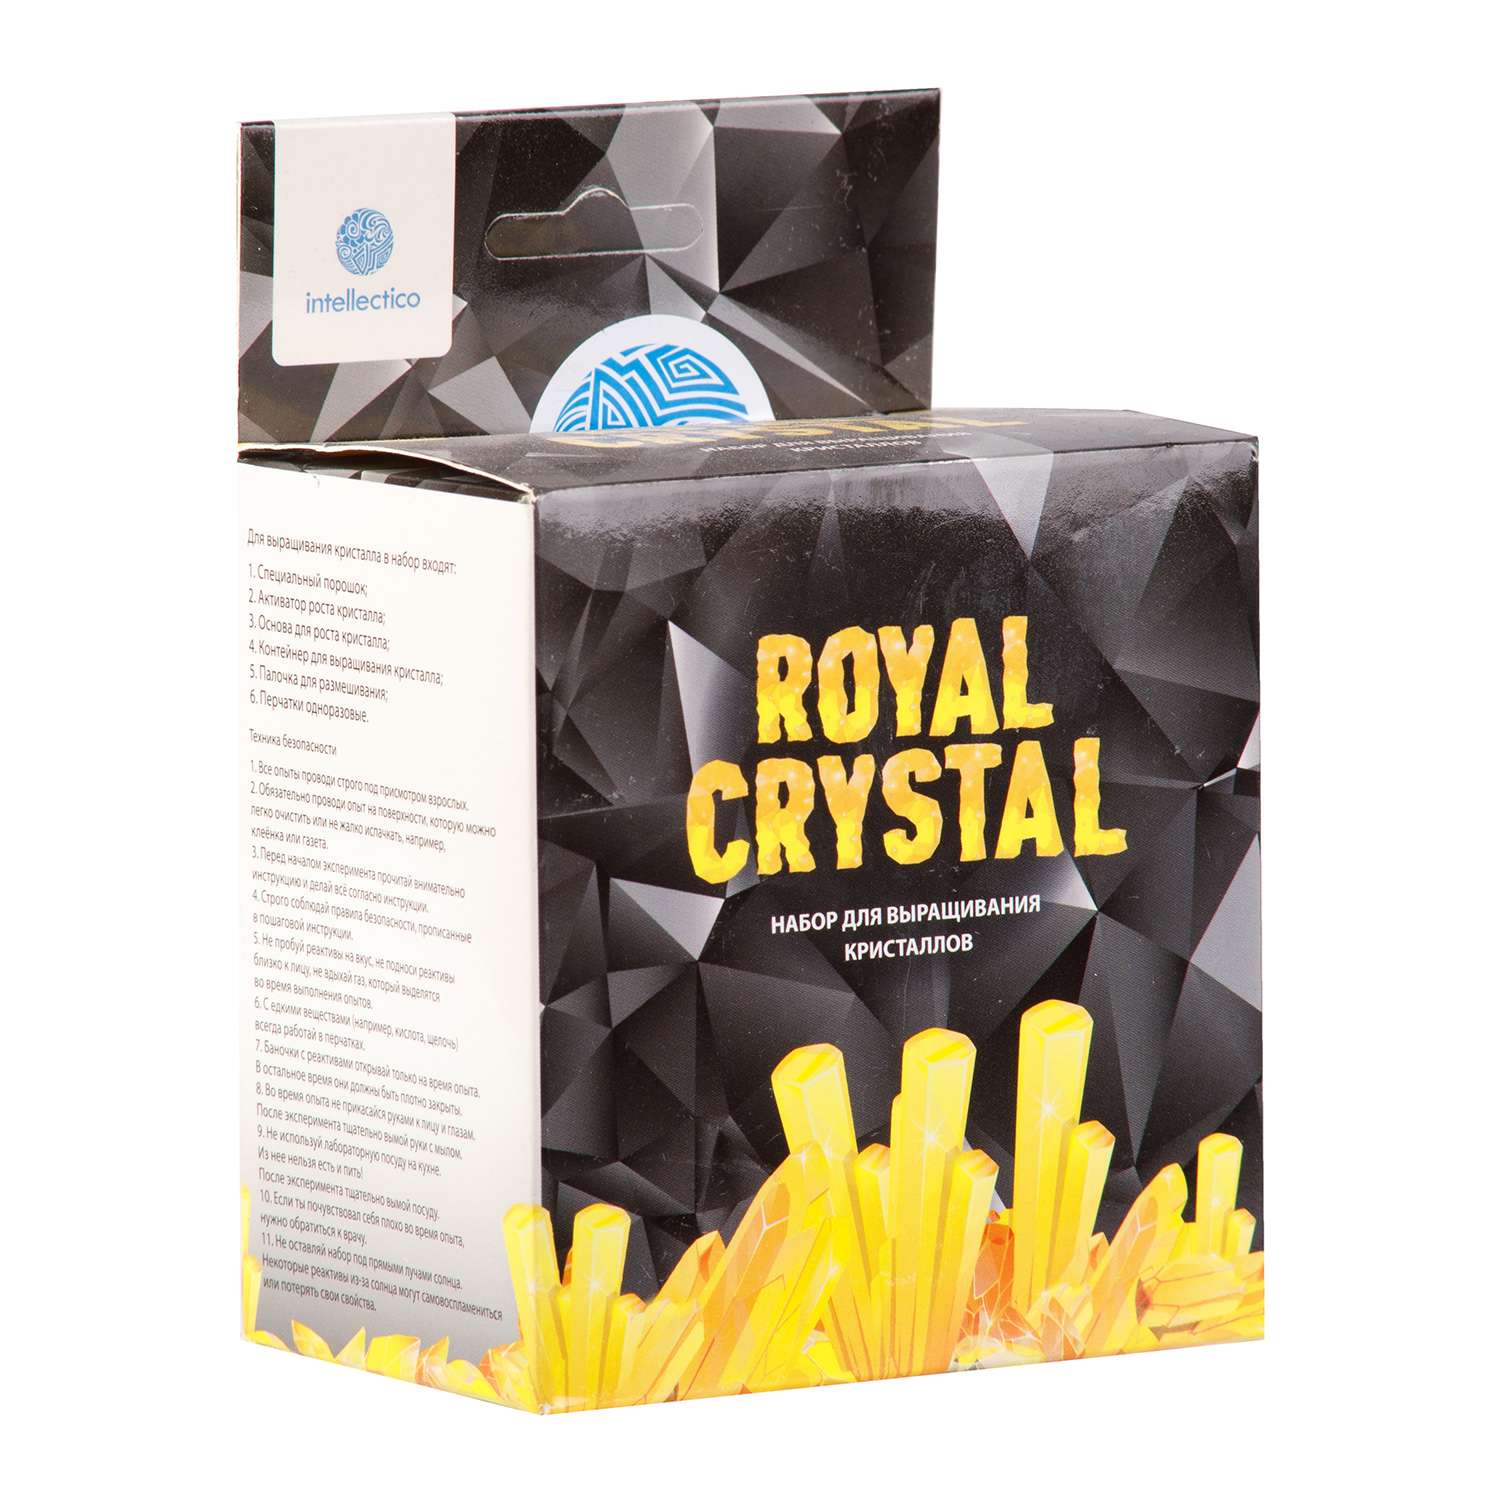 Crystal royal. 511 Набор для экспериментов Intellectico "Royal Crystal". Intellectico Royal Crystal. Intellectico Royal Crystal состав. Желтый Кристалл на хрустале.